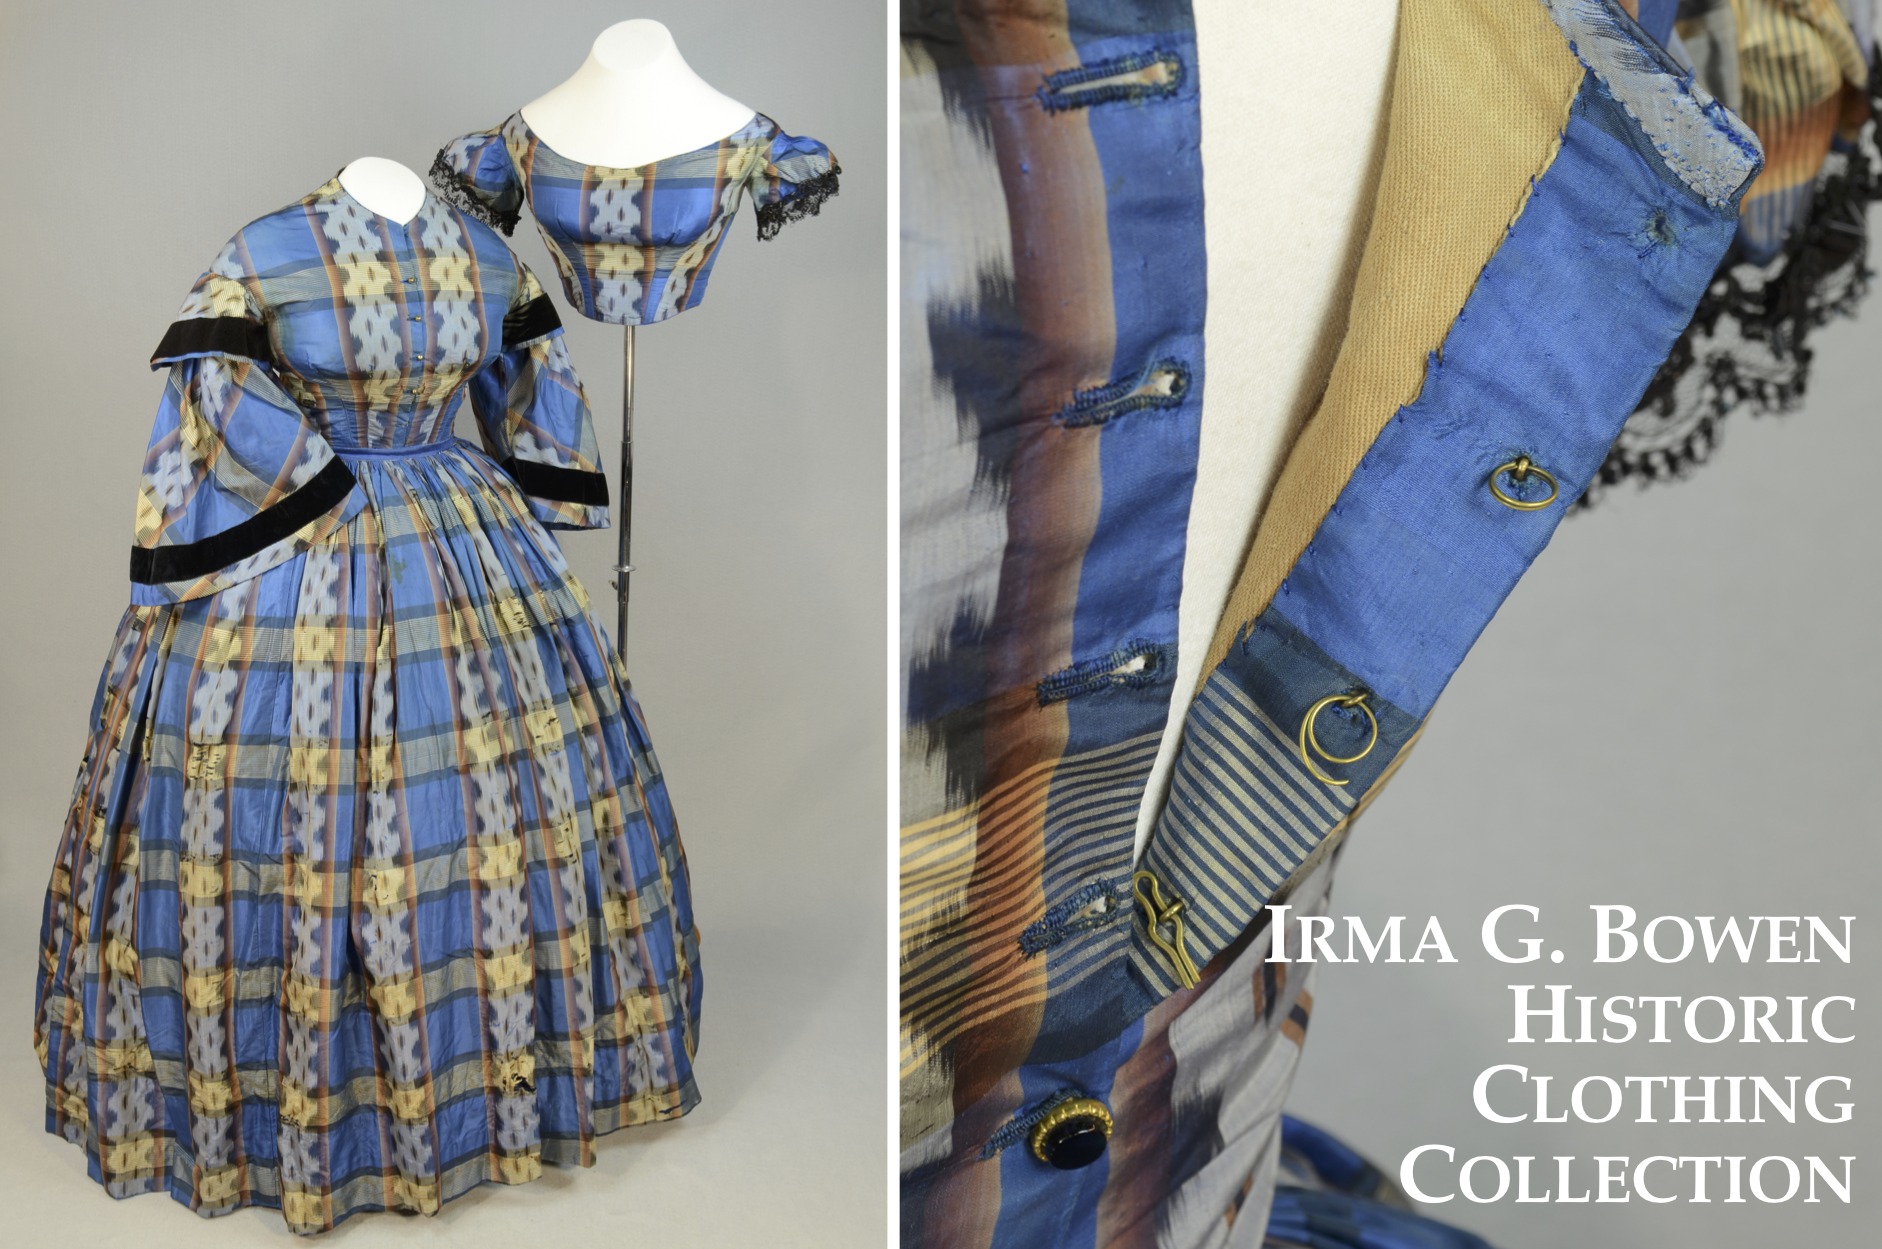 Irma G. Bowen Historic Clothing Collection - University of New